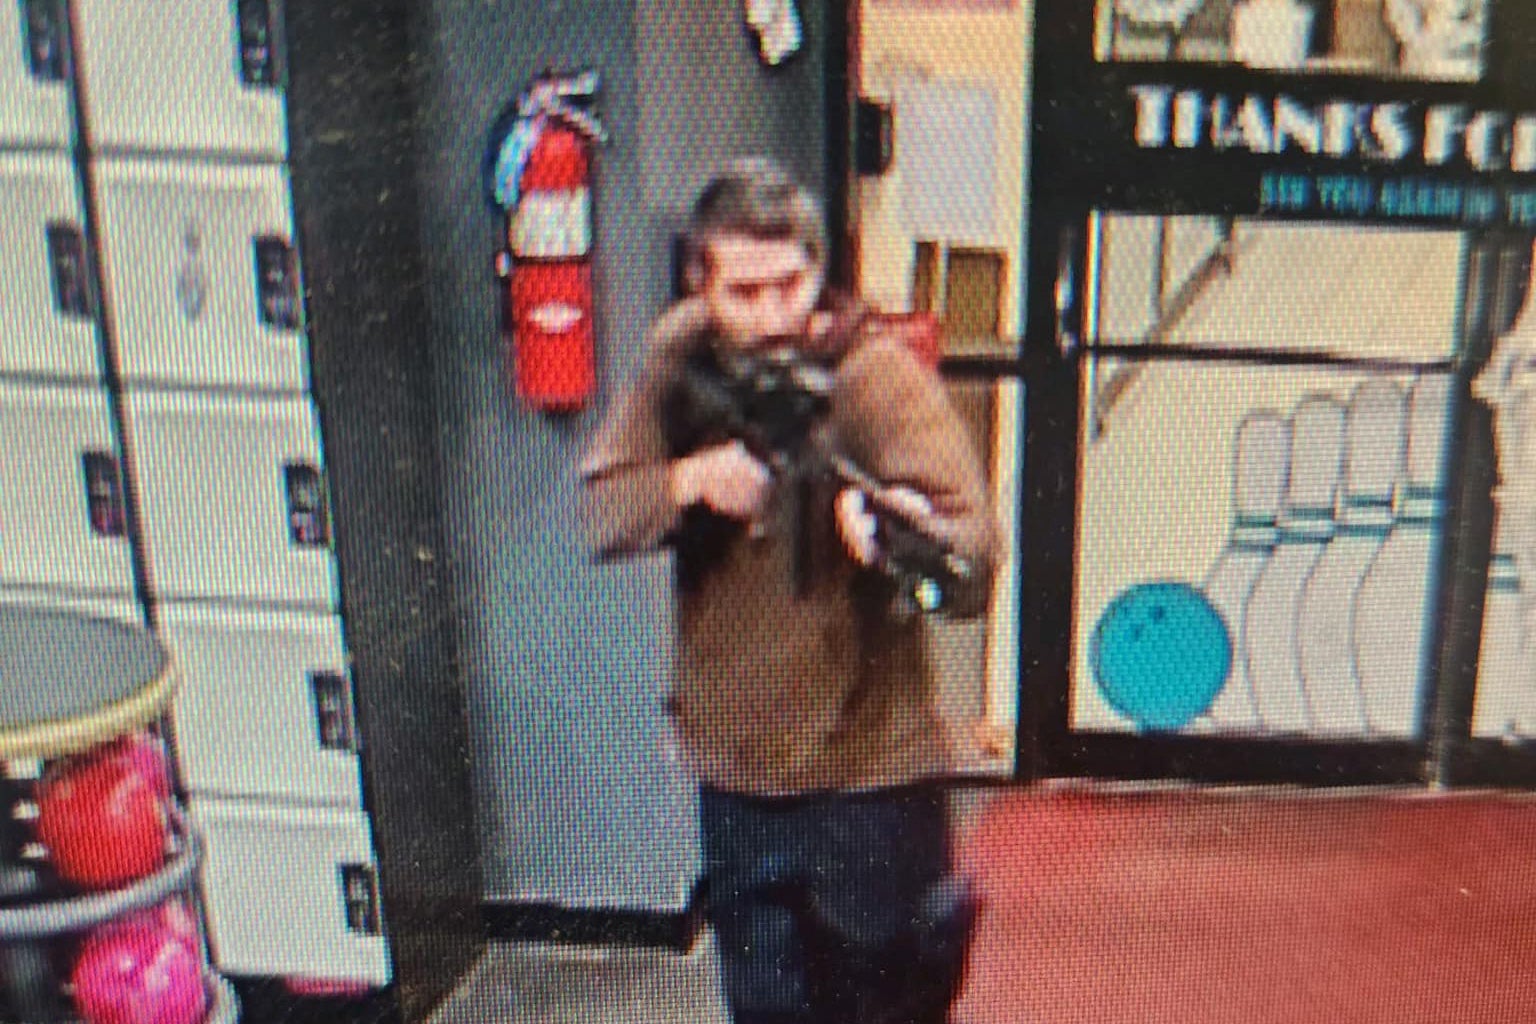 Gunman caught on surveillance footage